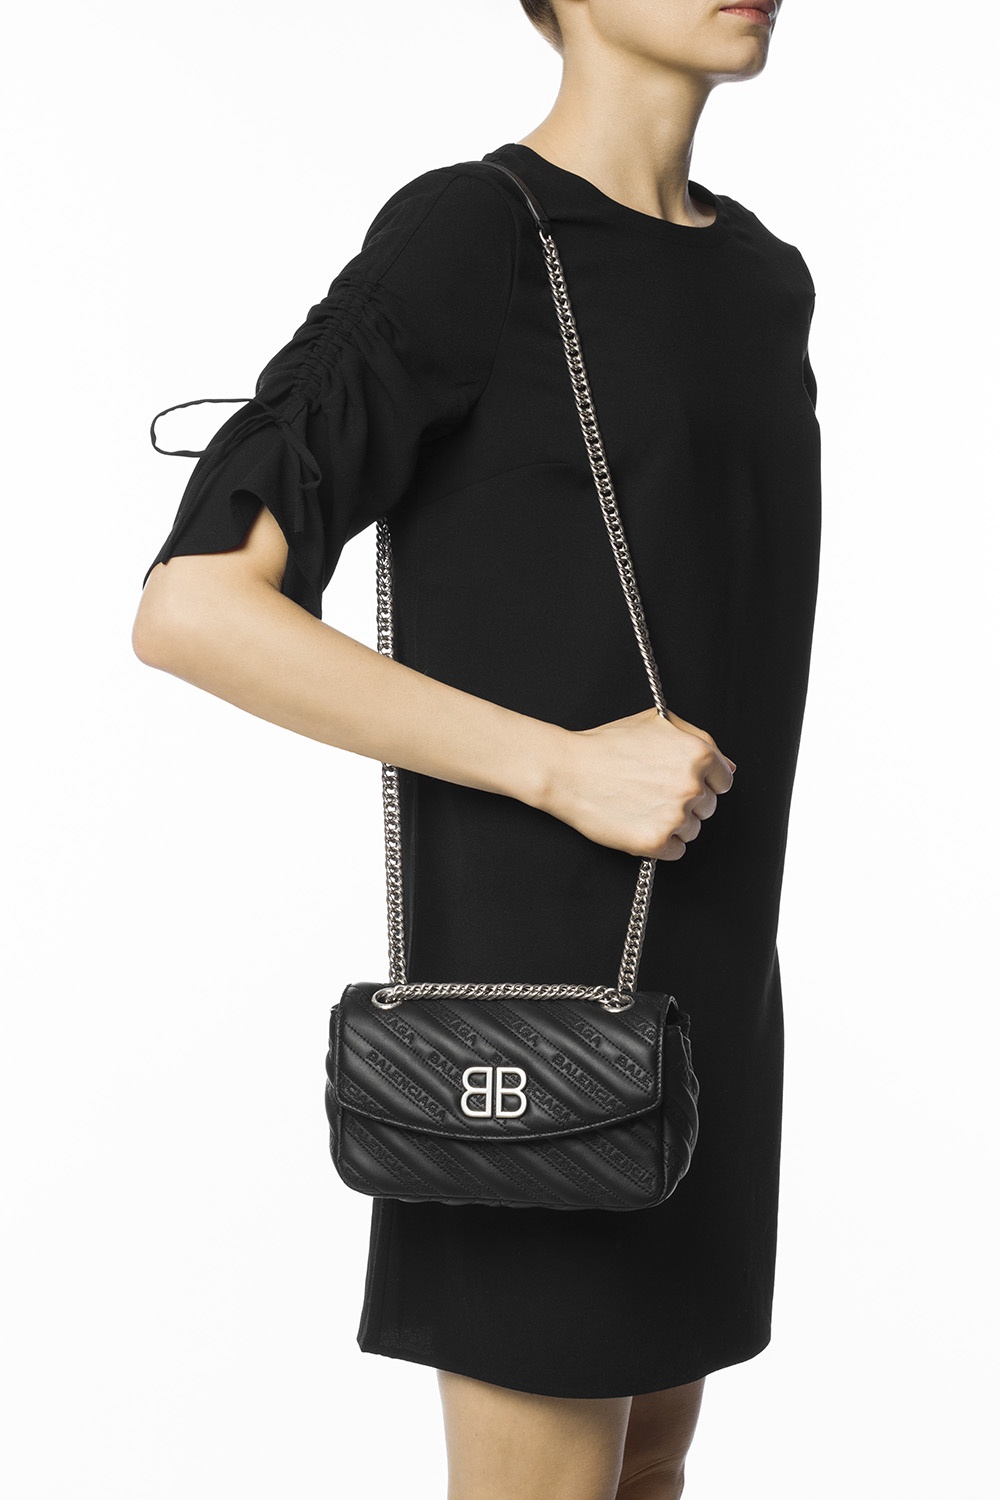 Balenciaga Embroidered Leather Bag